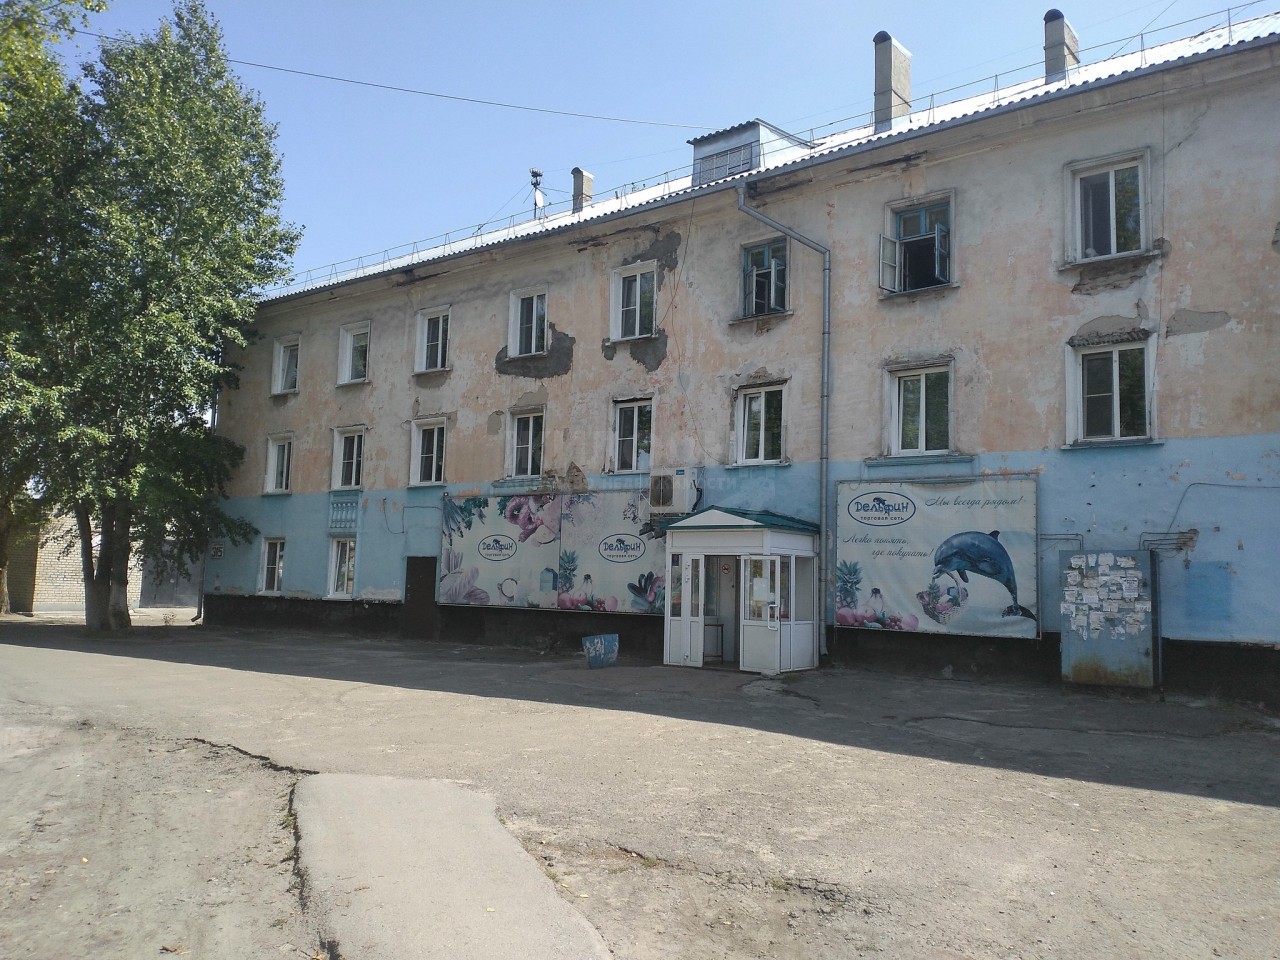 край. Алтайский, г. Барнаул, ул. Анатолия, д. 315-фасад здания